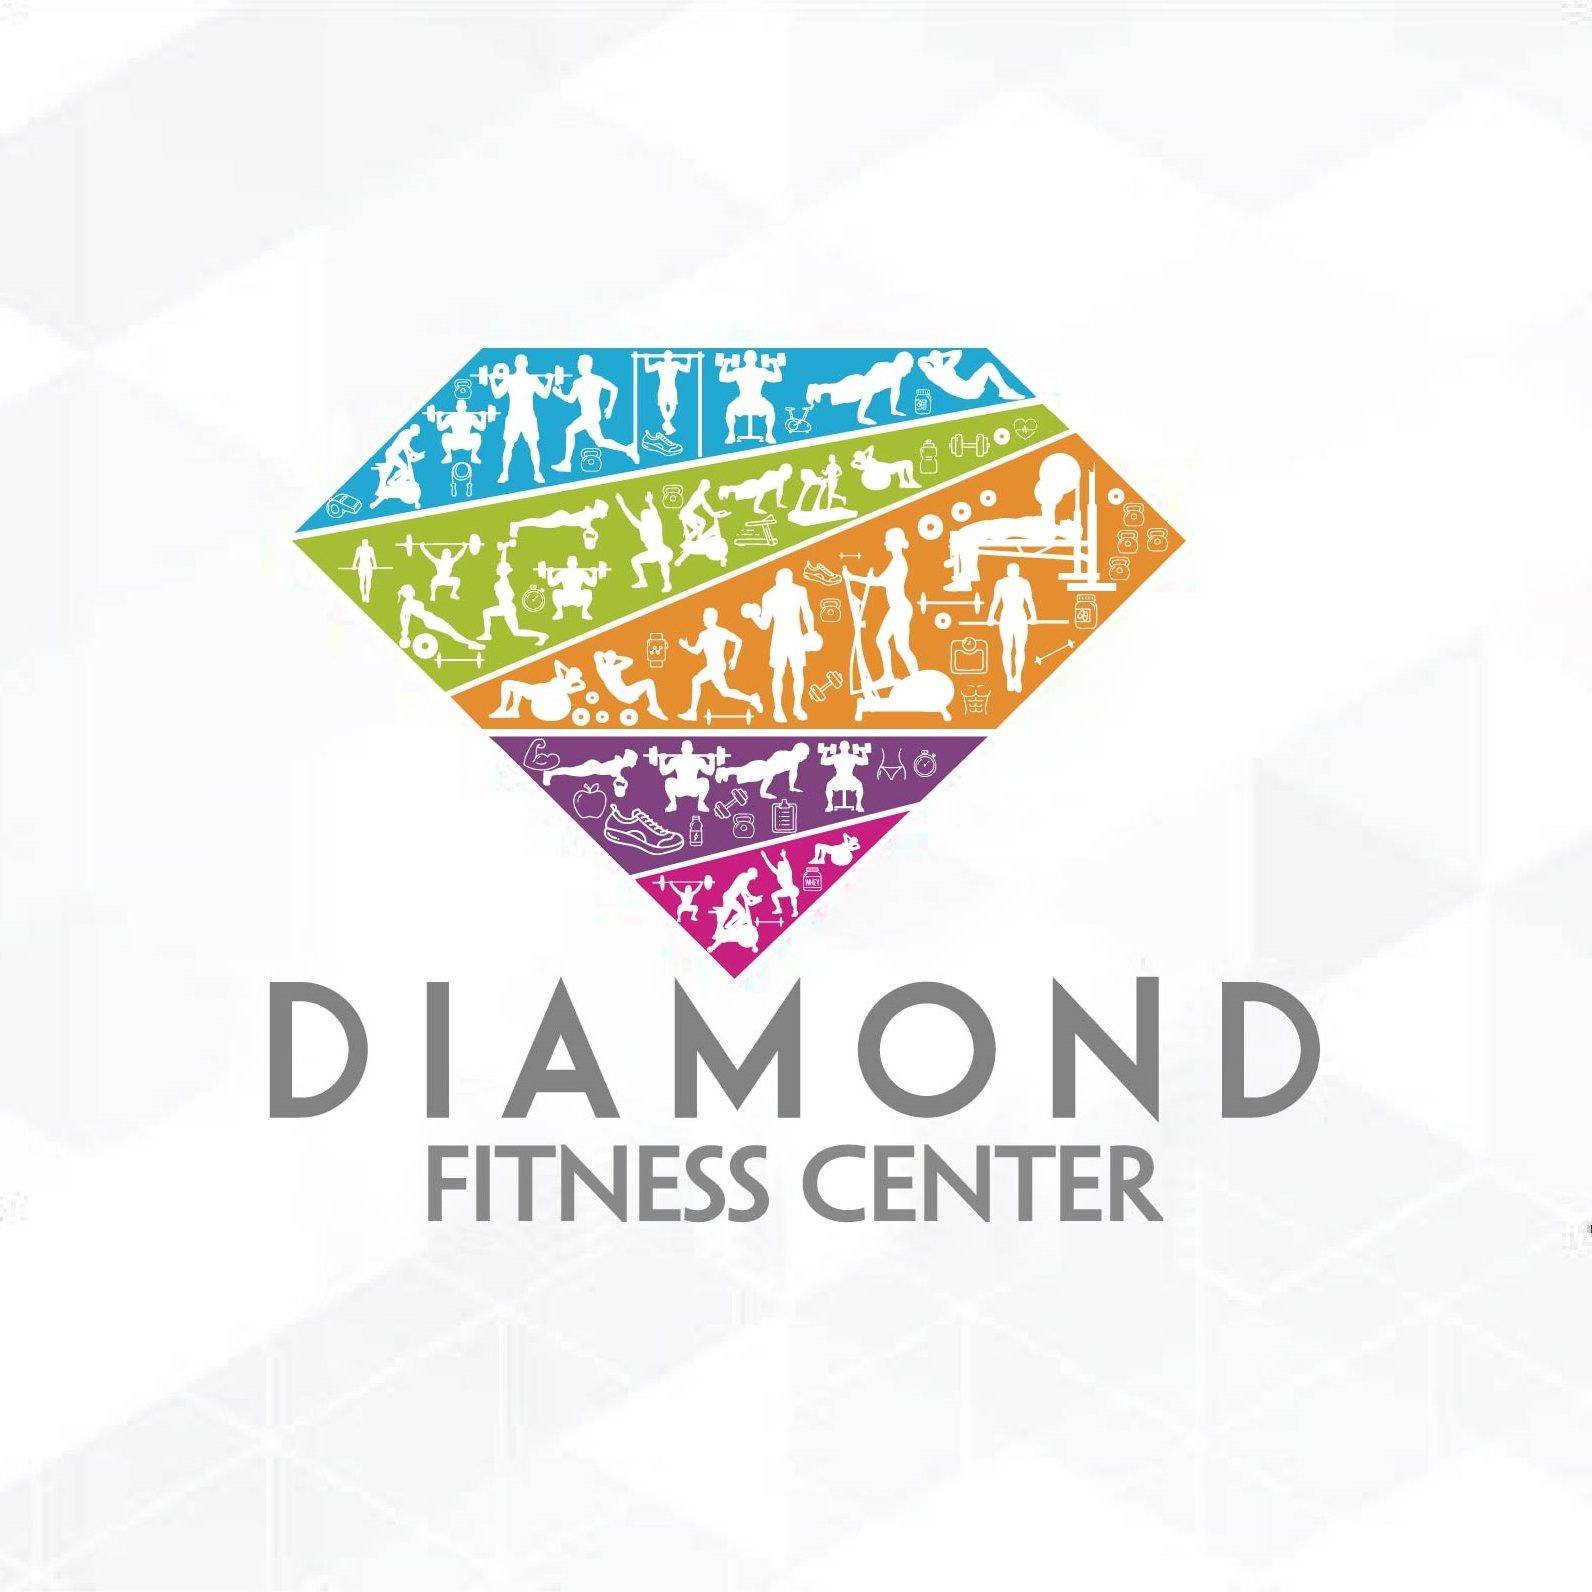 Diamond Fitness Center Trường Sa